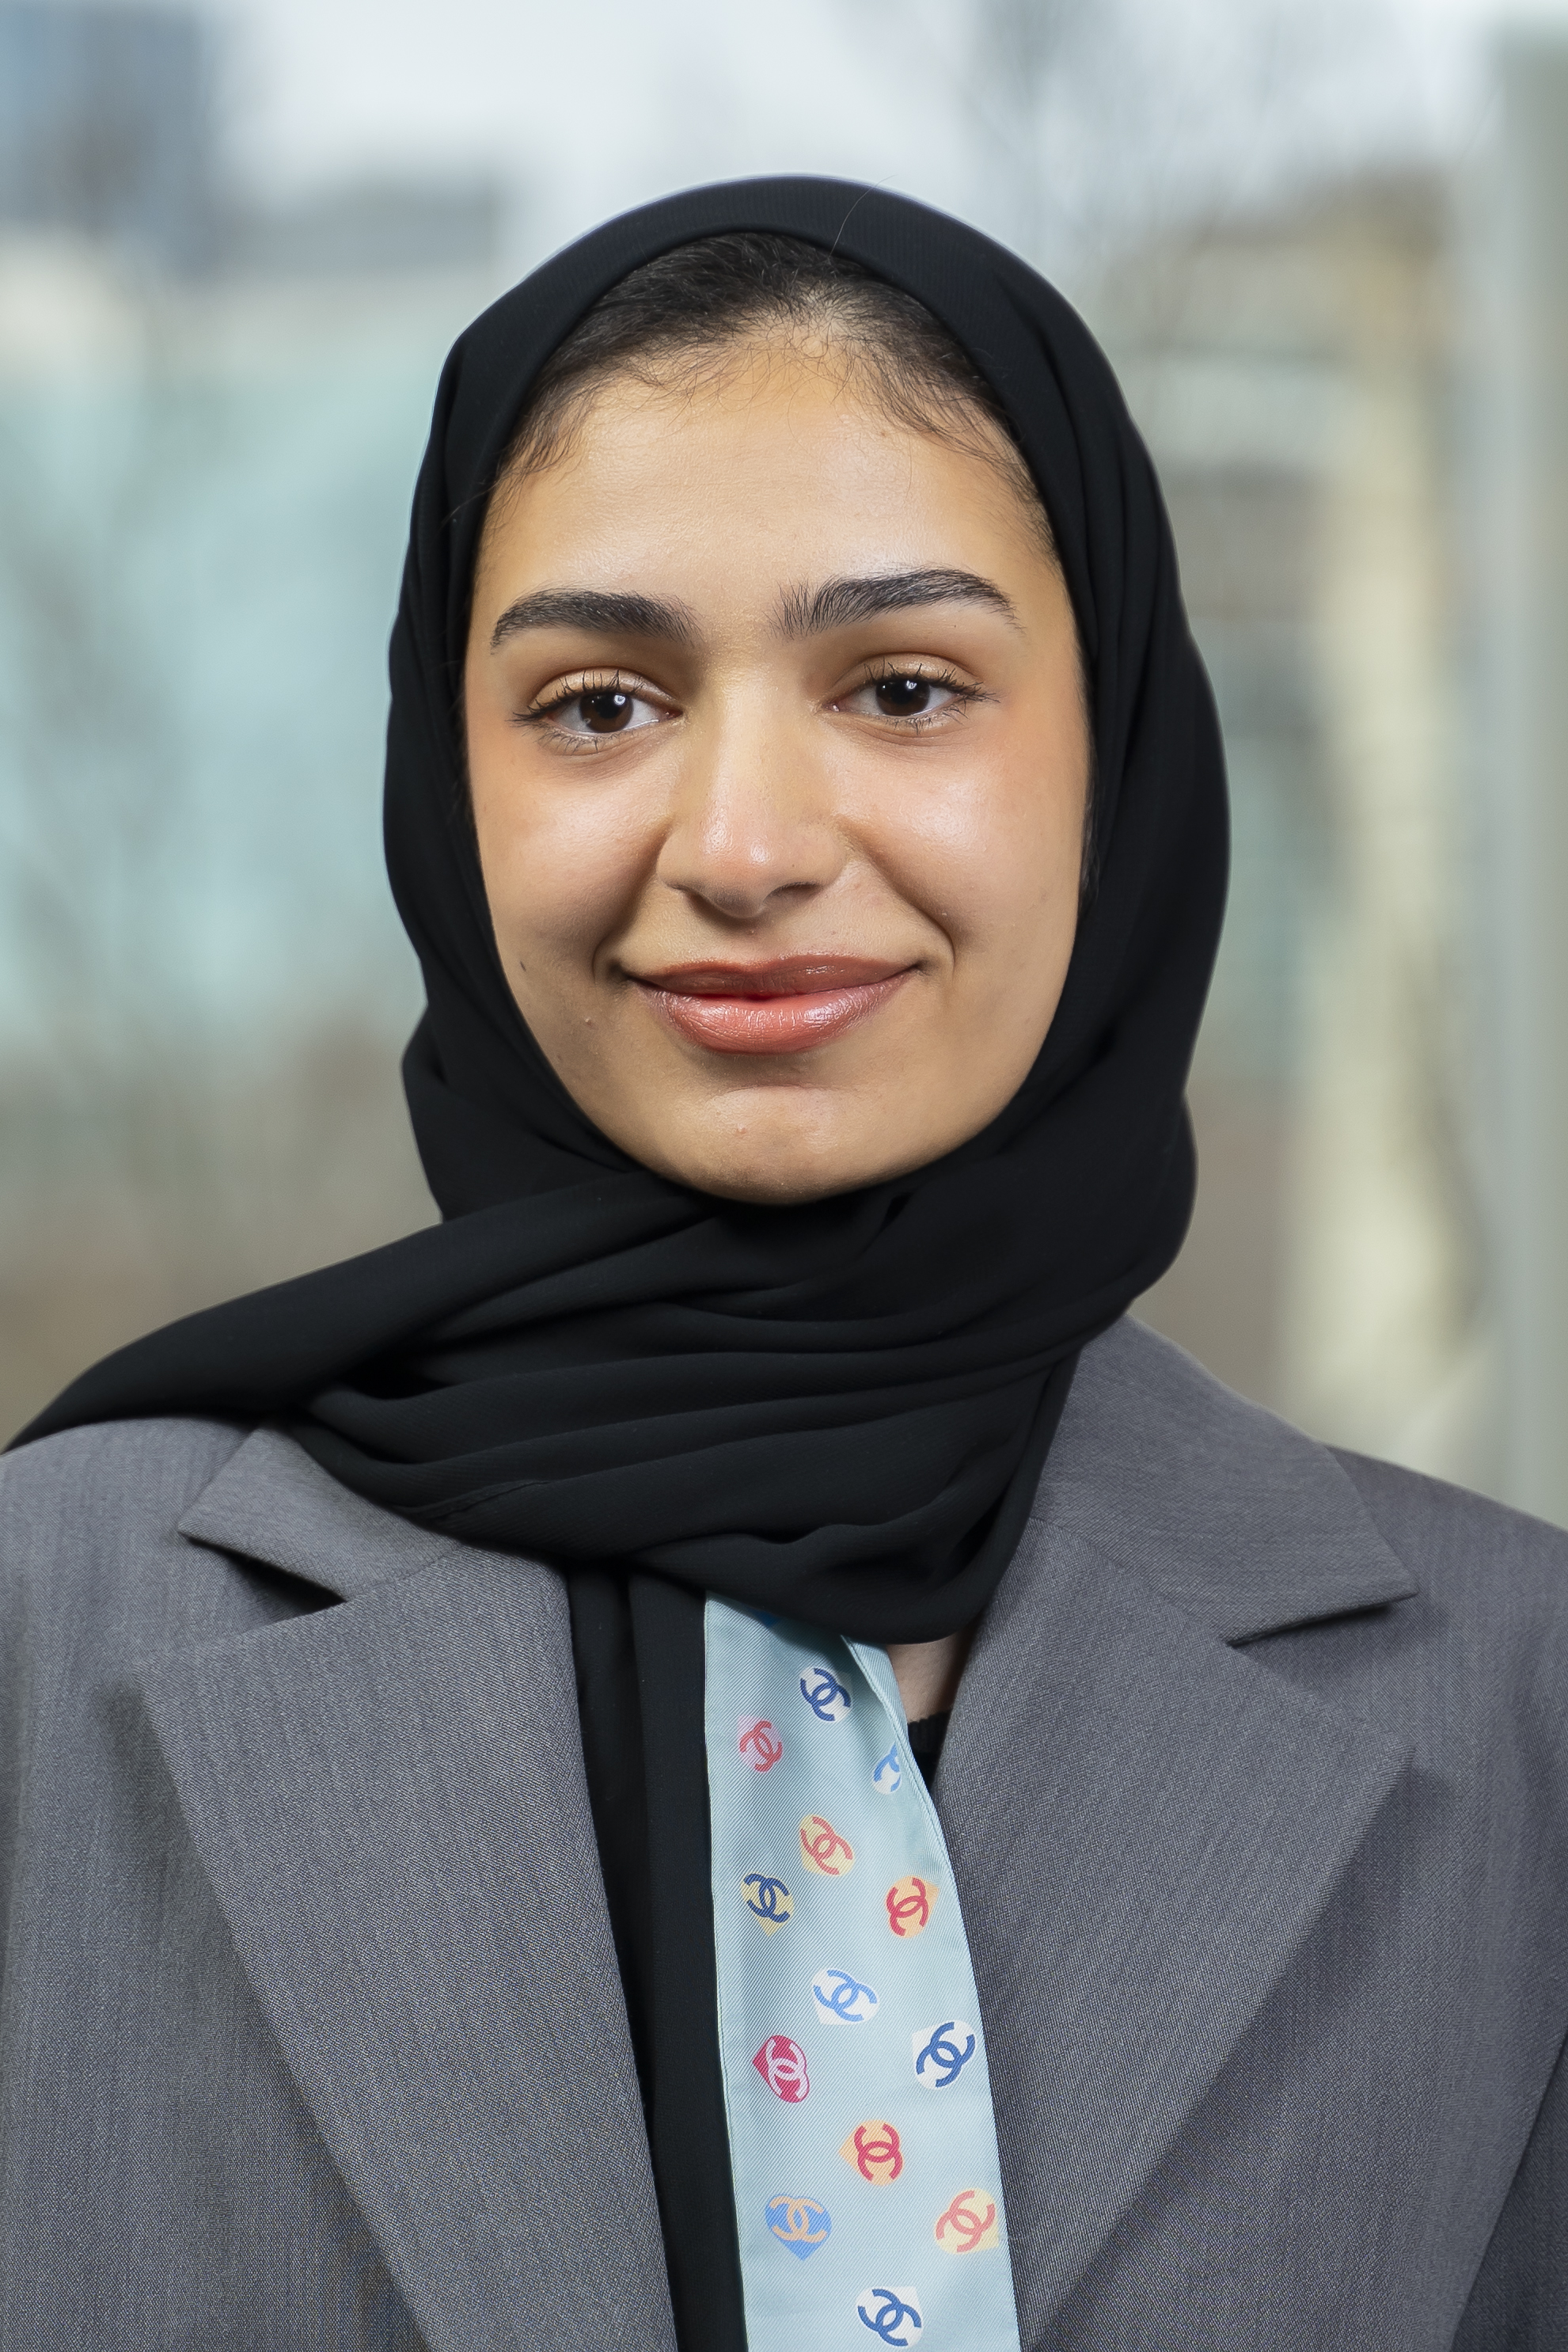 Zahraa Alkhayat, junior at the University of North Carolina, Chapel Hill majoring in Environmental Engineering.